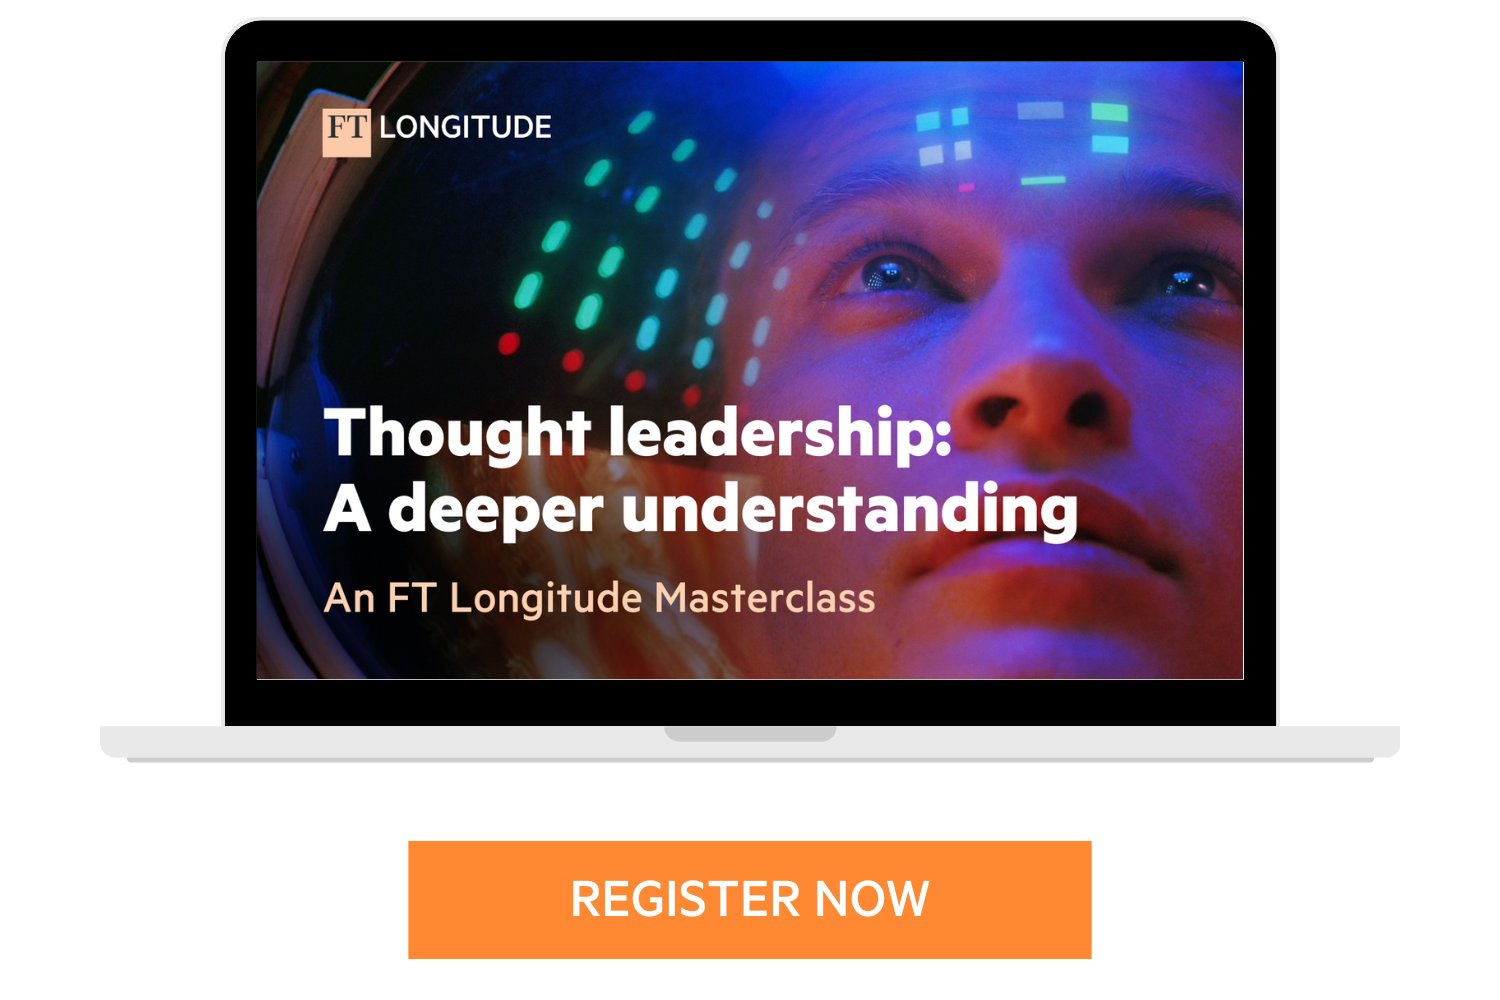 Thought leadership: A deeper understanding